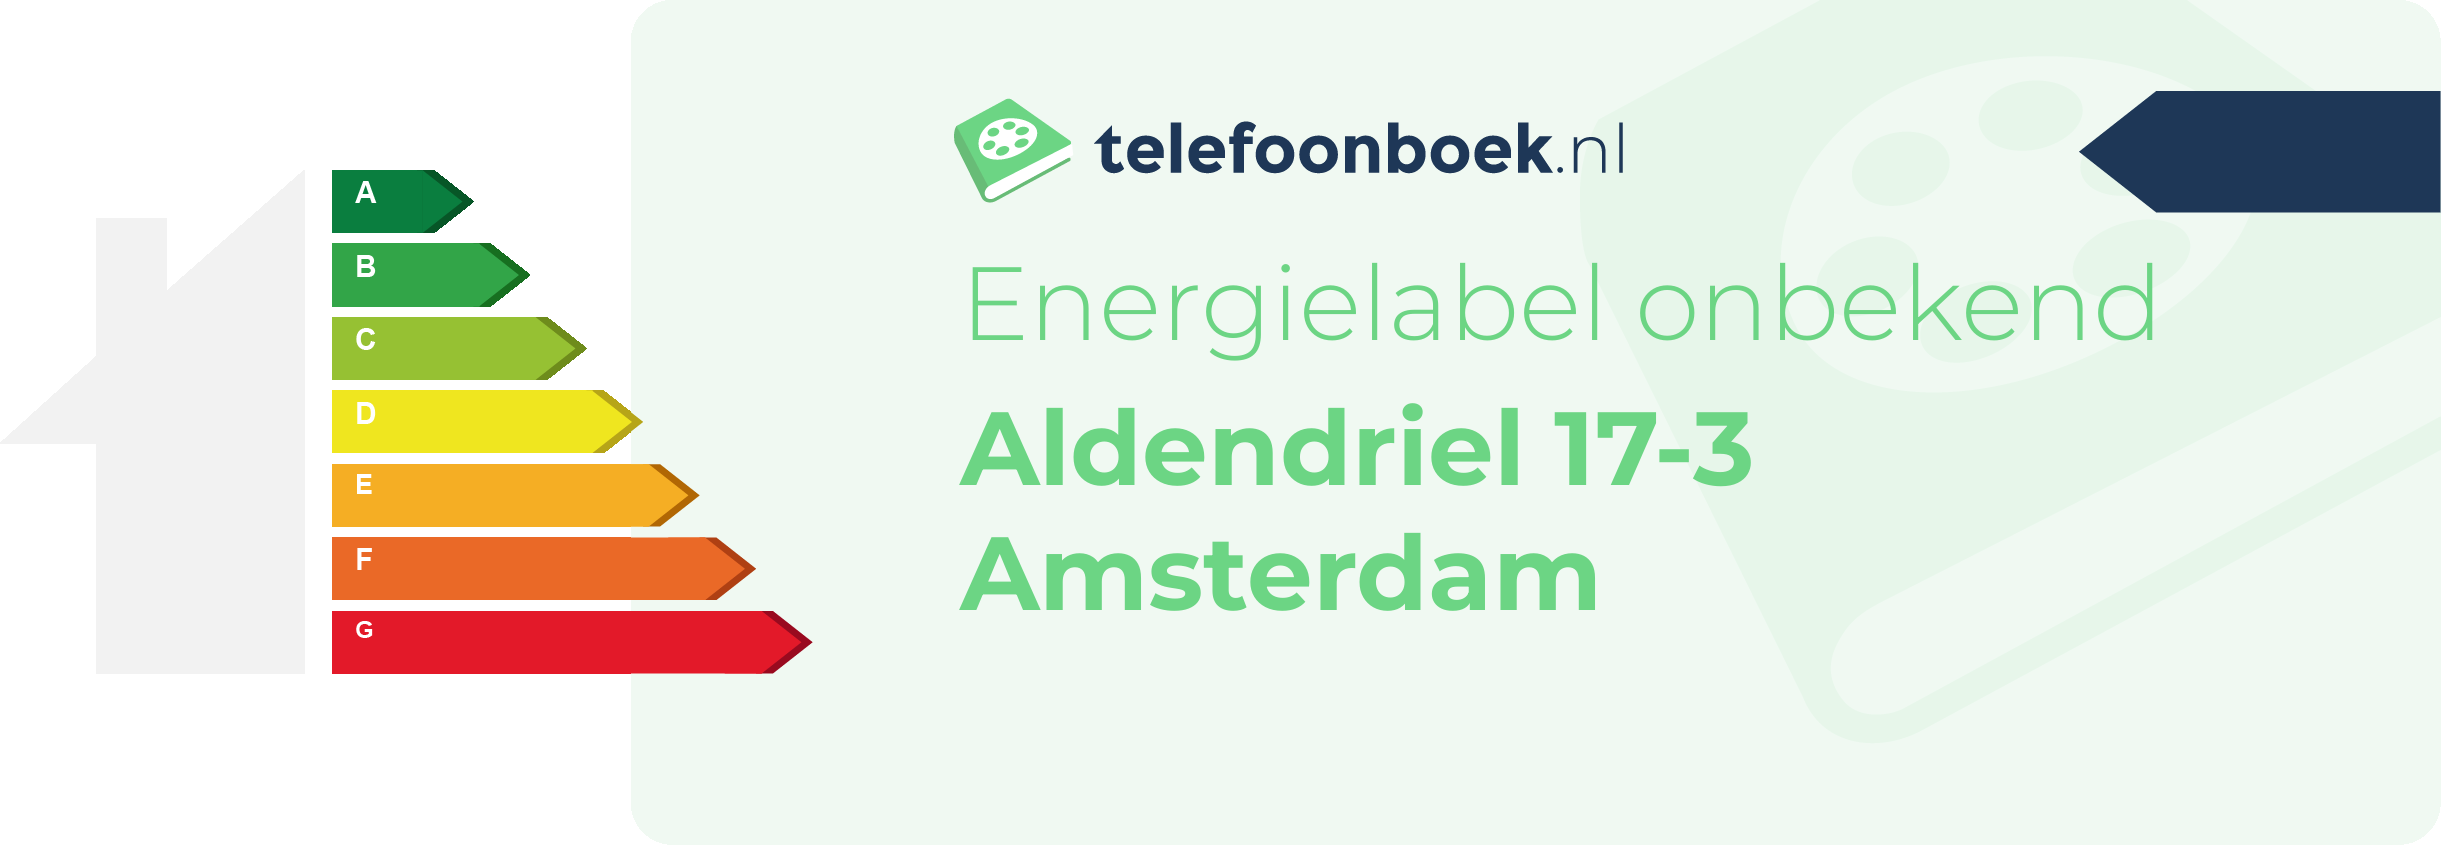 Energielabel Aldendriel 17-3 Amsterdam